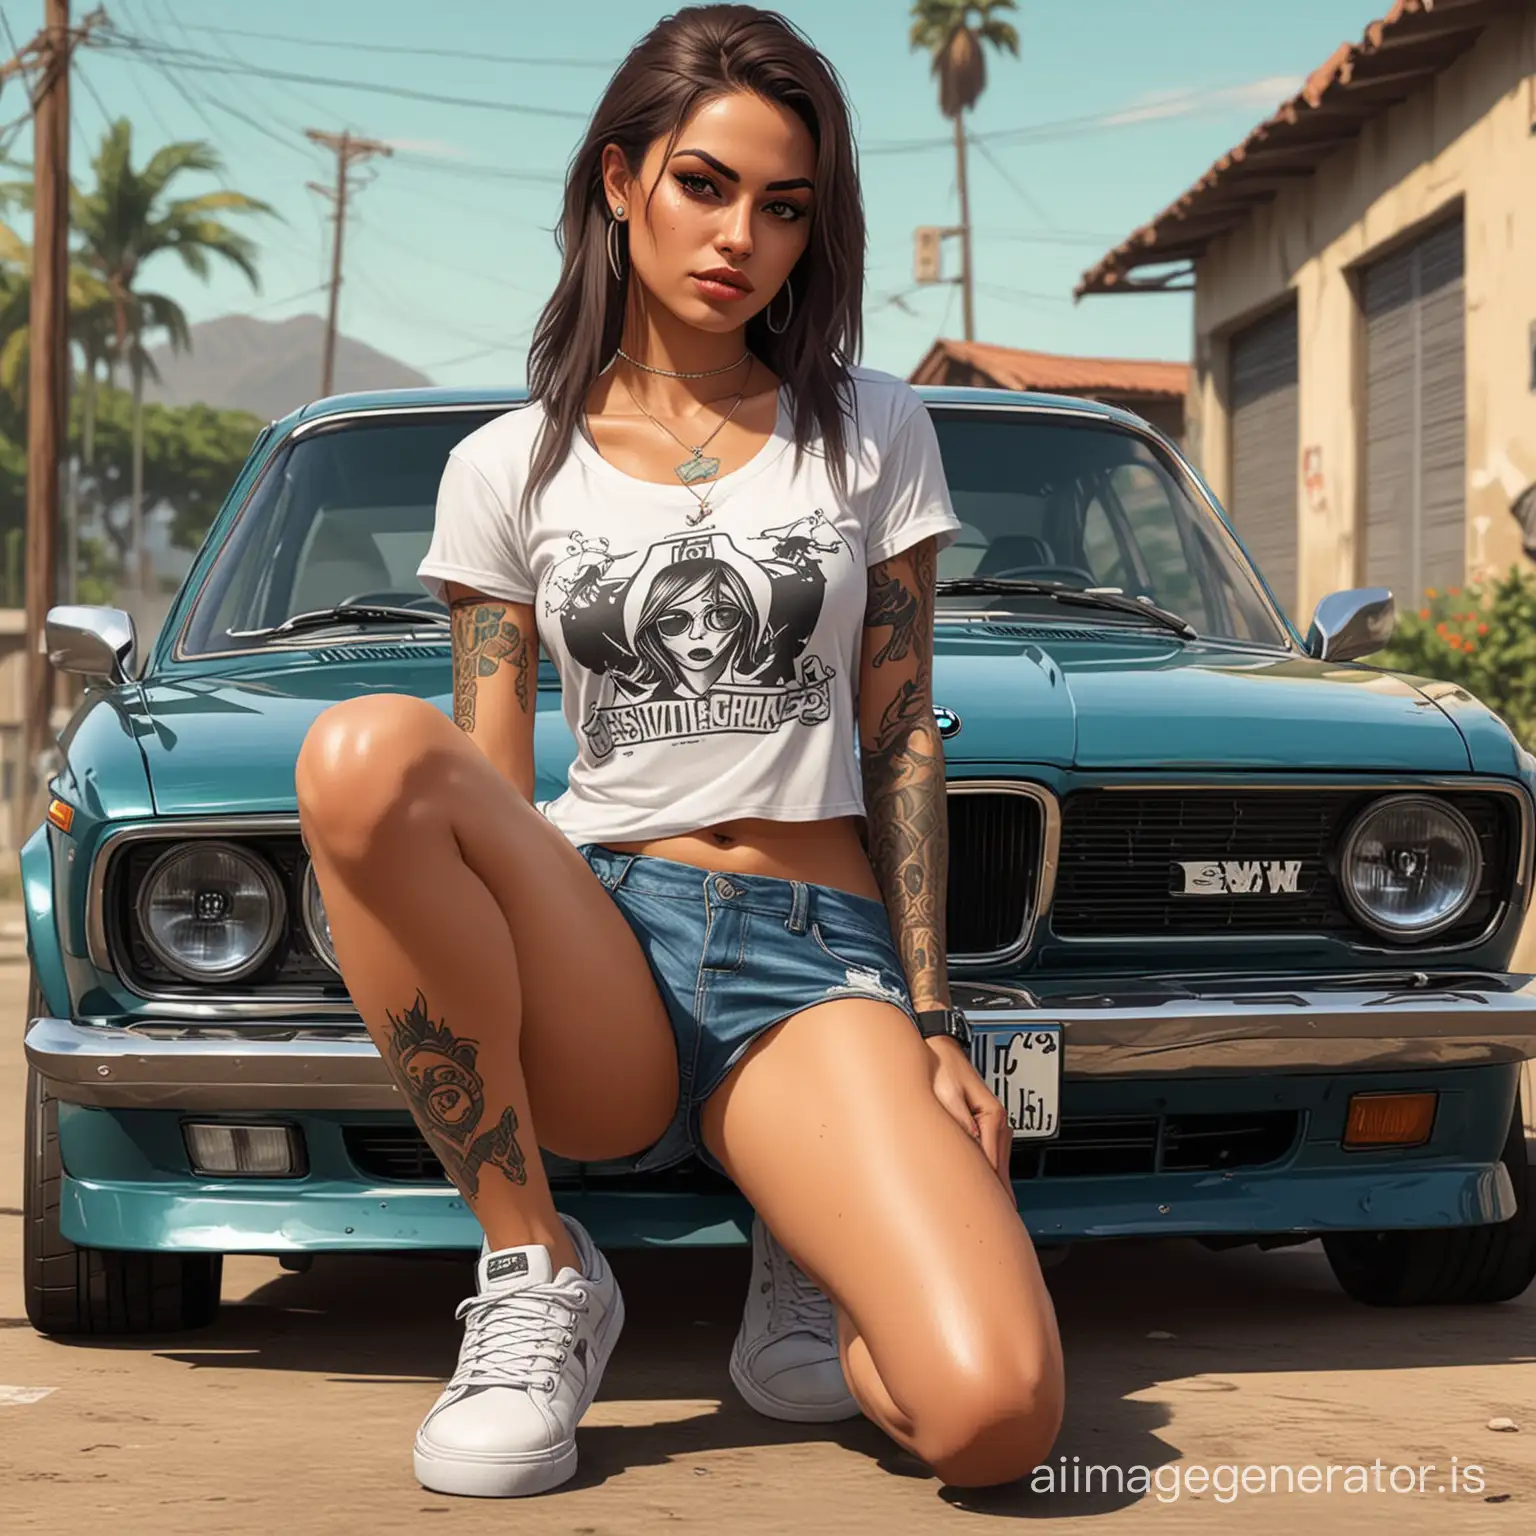 Brazilian-Style-GTA-San-Andreas-Cartoon-Art-with-Modern-2019-BMW-Car-and-Stylish-Girl-Holding-Pistol